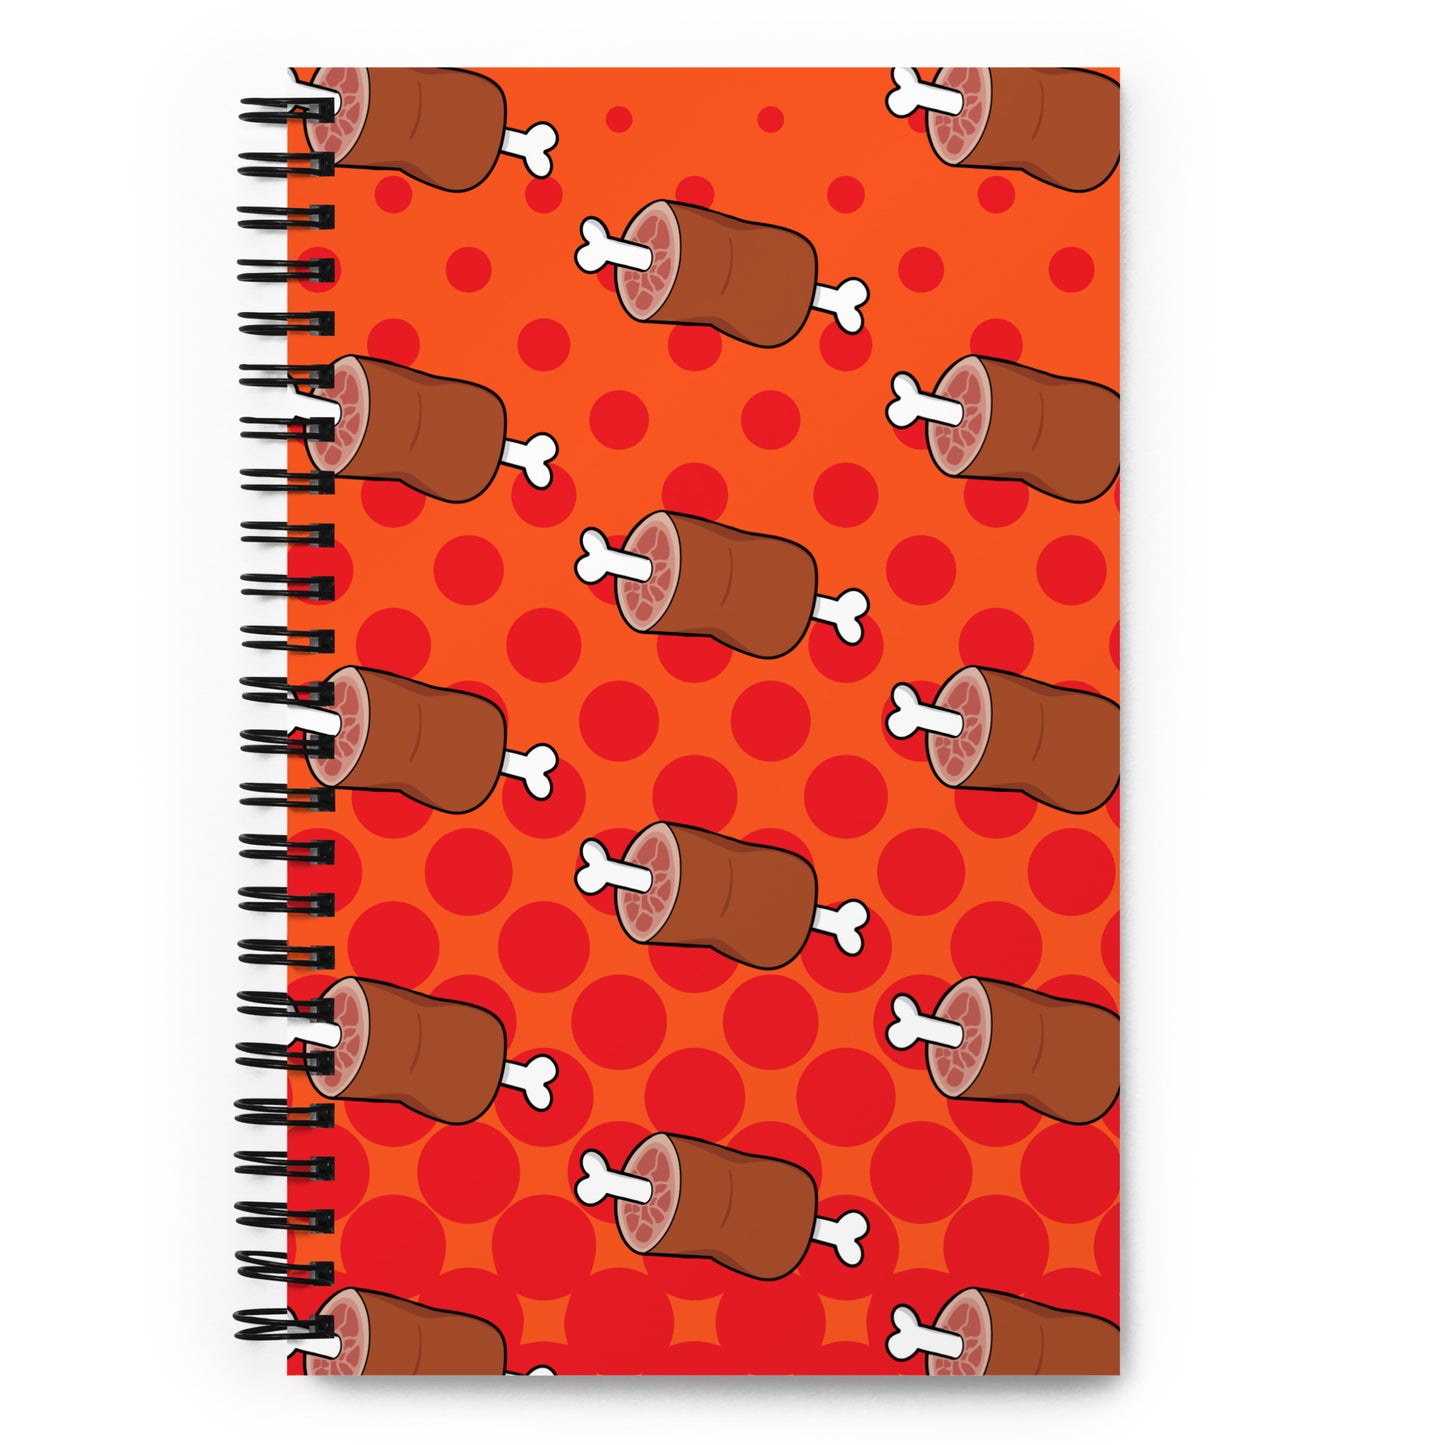 Meat Spiral notebook